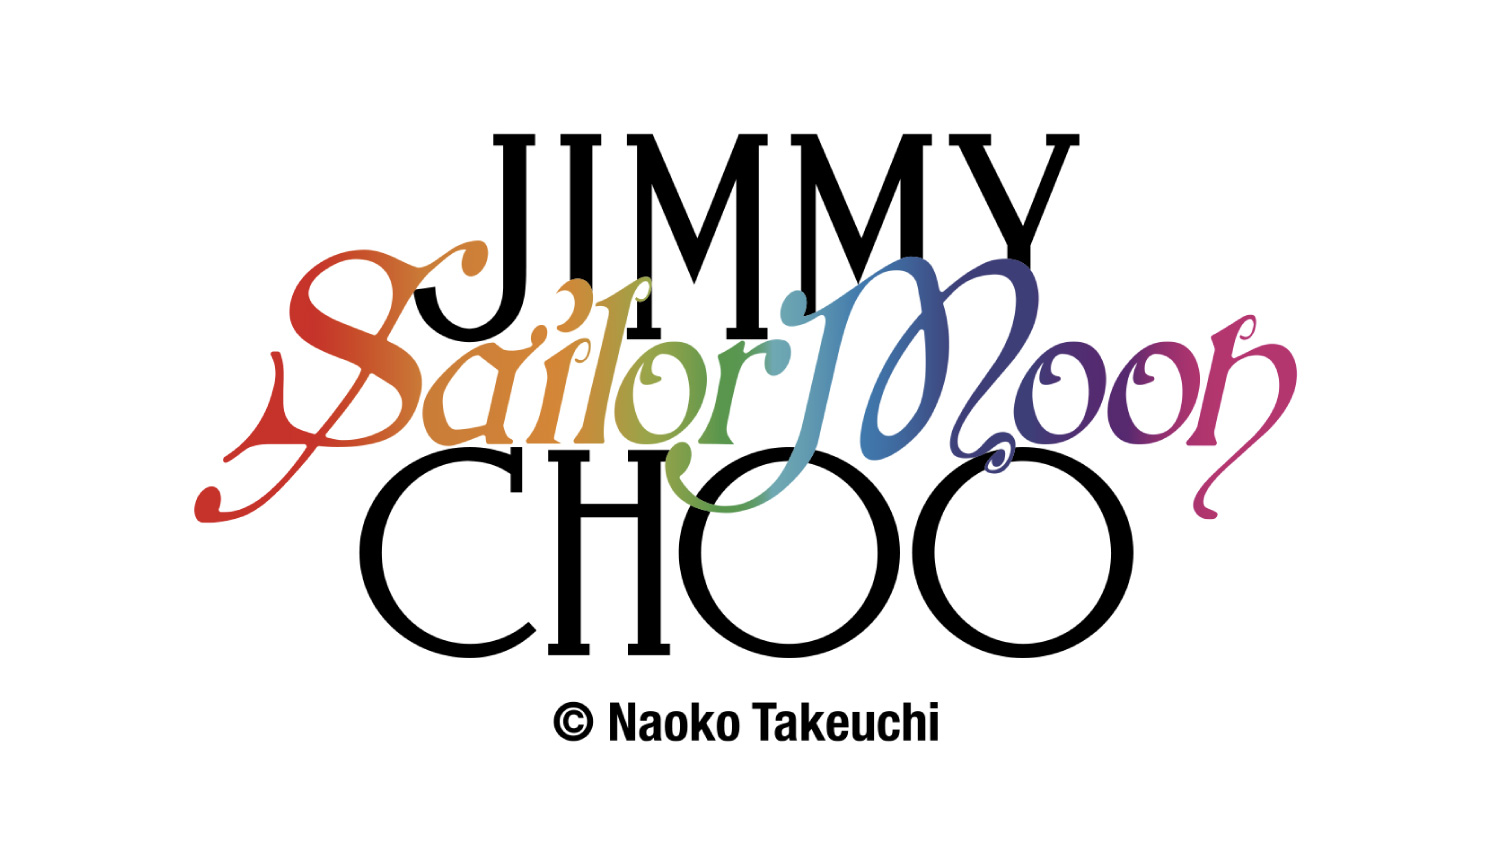 Jimmy Choo x Sailor Moon 30th Anniversary Collaboration